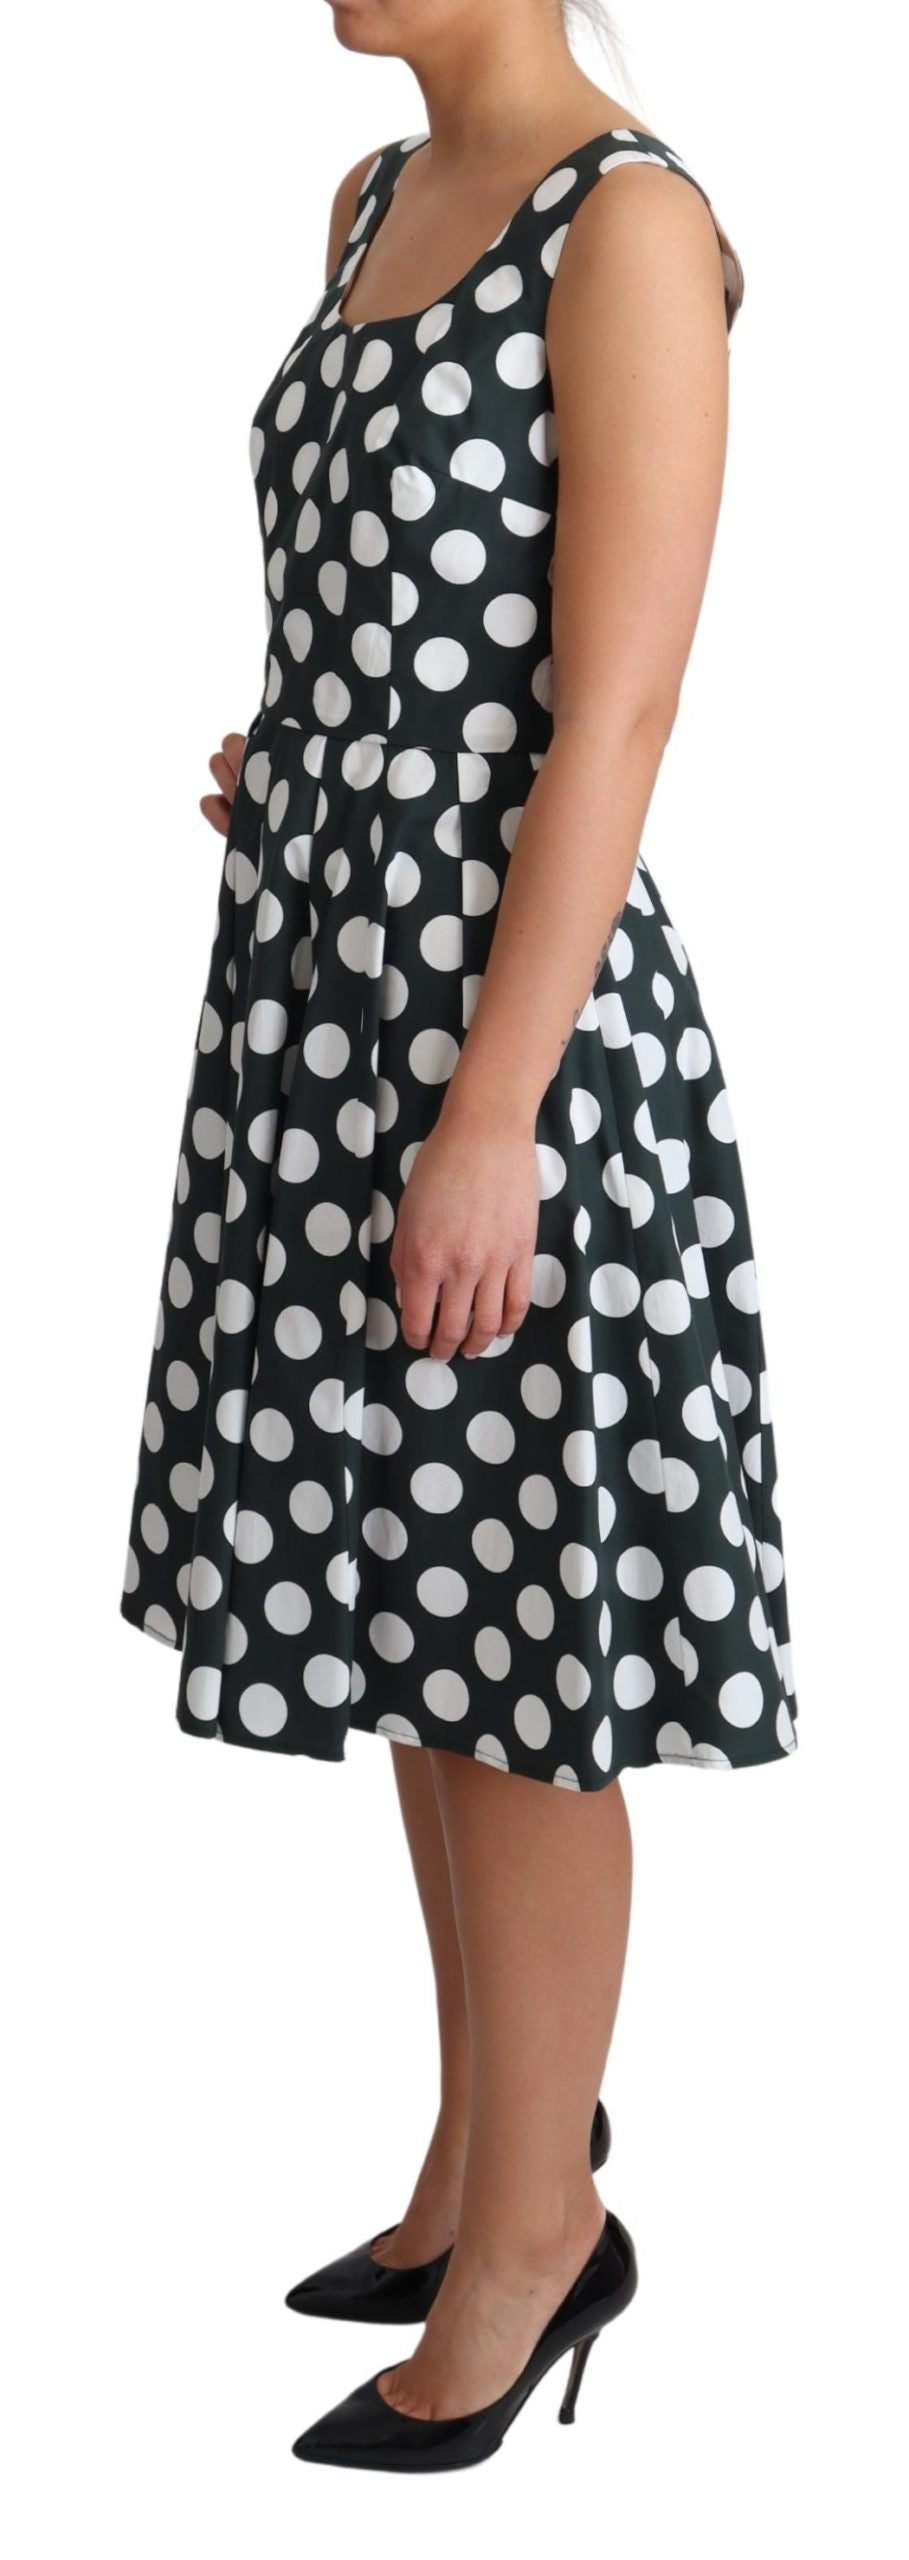 Chic Polka Dot A-line Sleeveless Dress